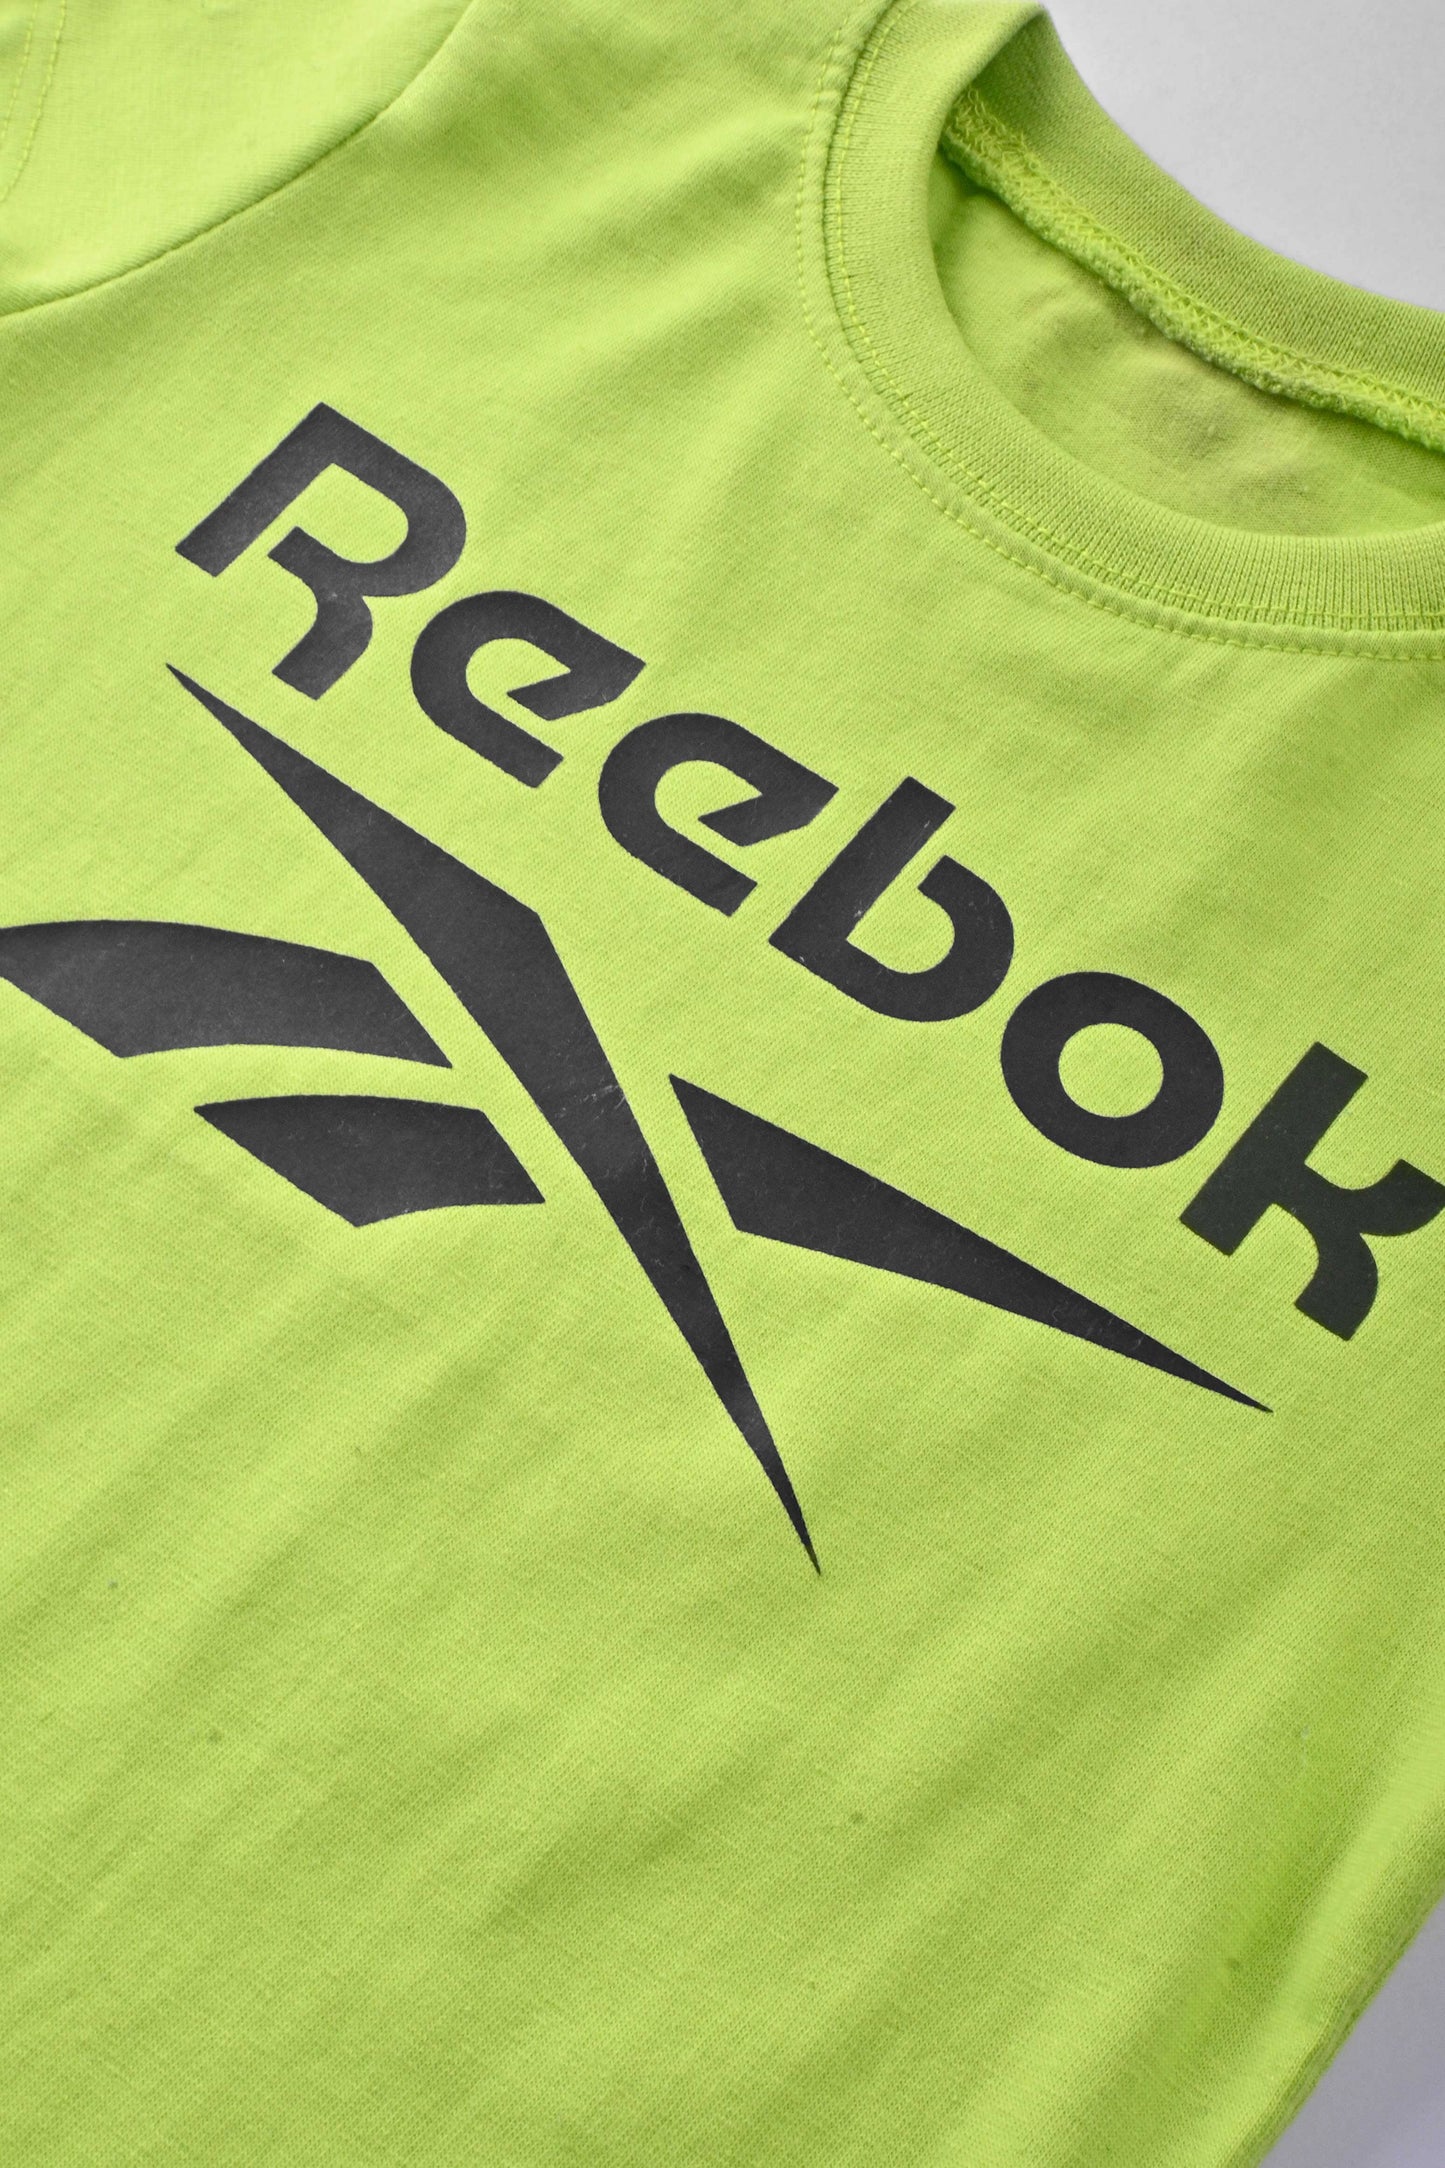 Reebok Kid's Logo Printed Short Sleeve Tee Shirt Kid's Tee Shirt HAS Apparel 